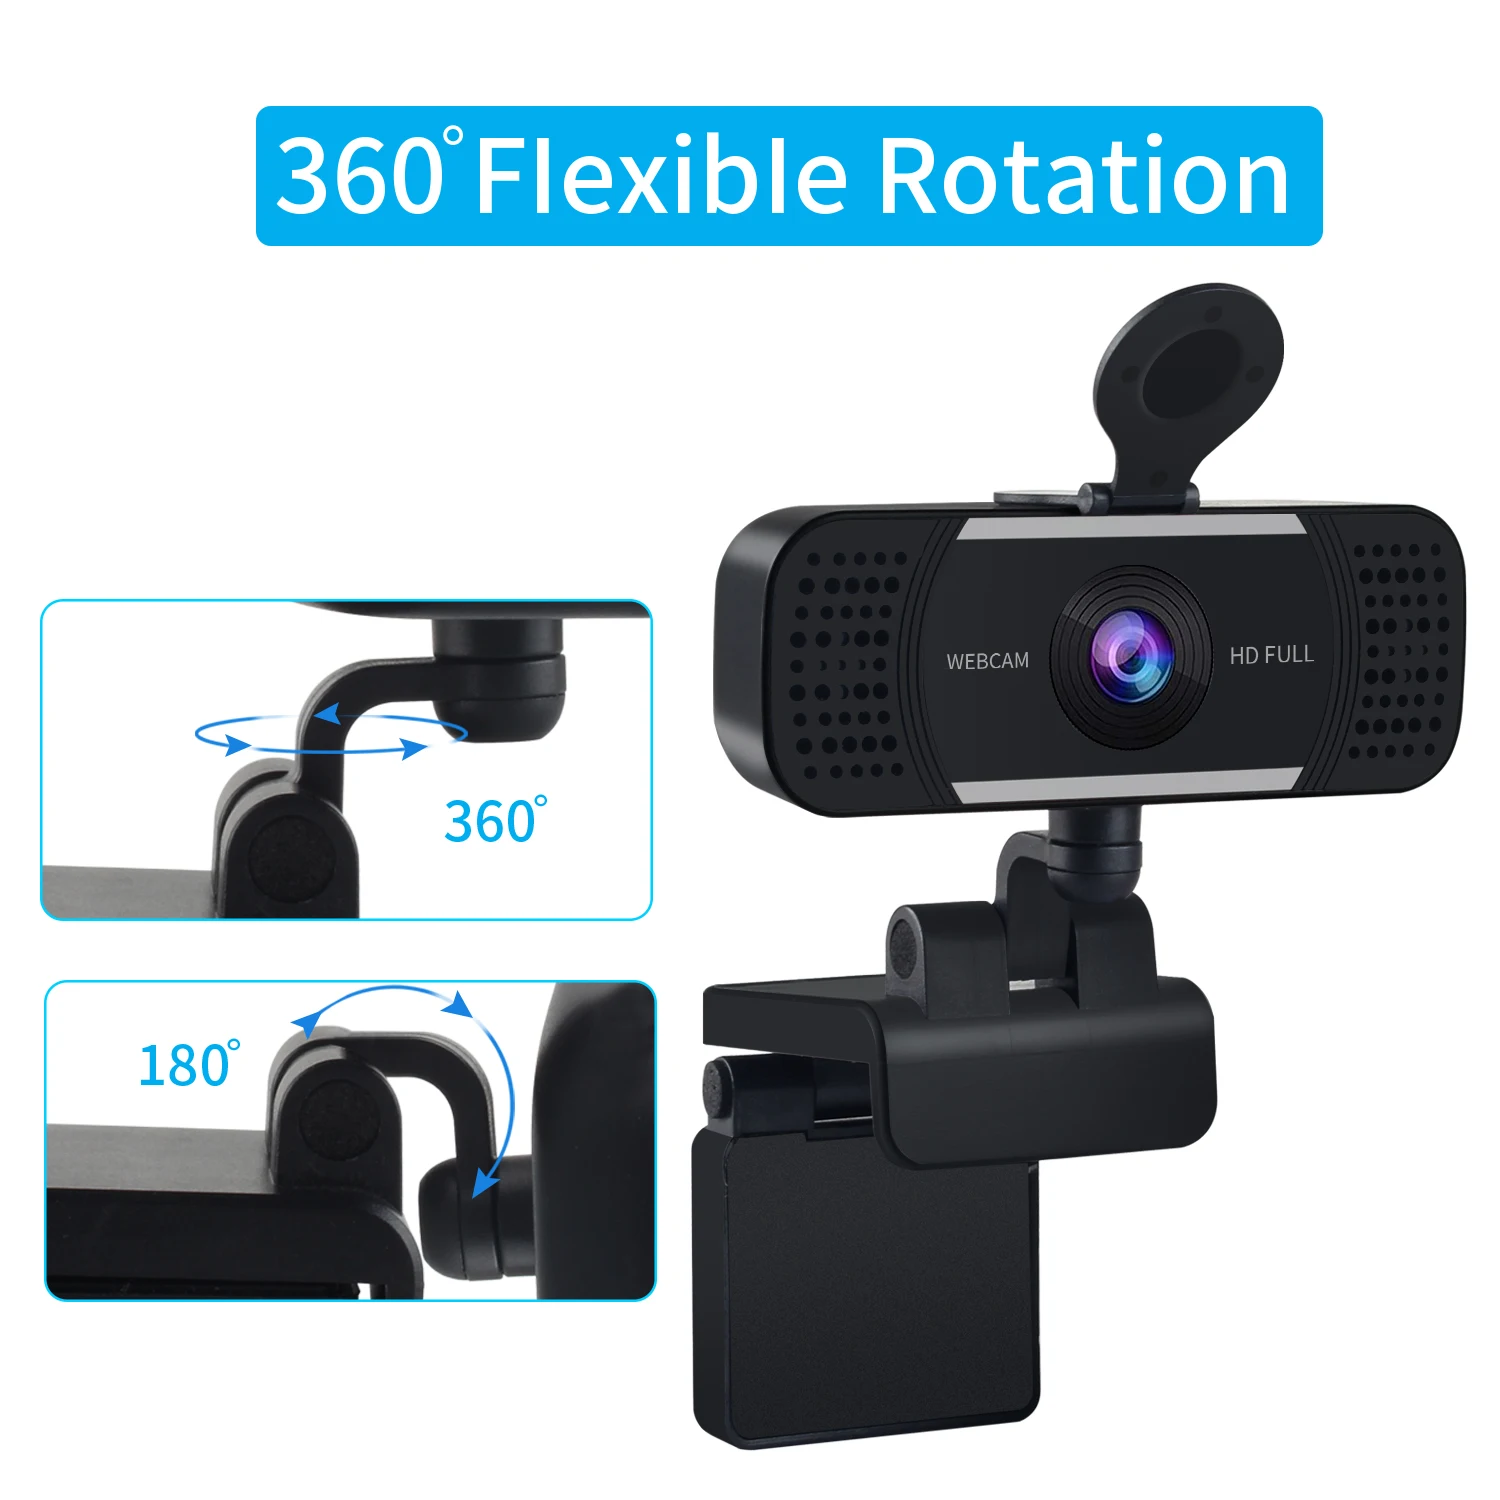 Usb 4k Web Cam With Microphone Autofocus For Pc Full Hd Web Camera 2k 4k 1080p Webcam Buy Webcam Web Camera Webcam 4k Web Cam Product On Alibaba Com